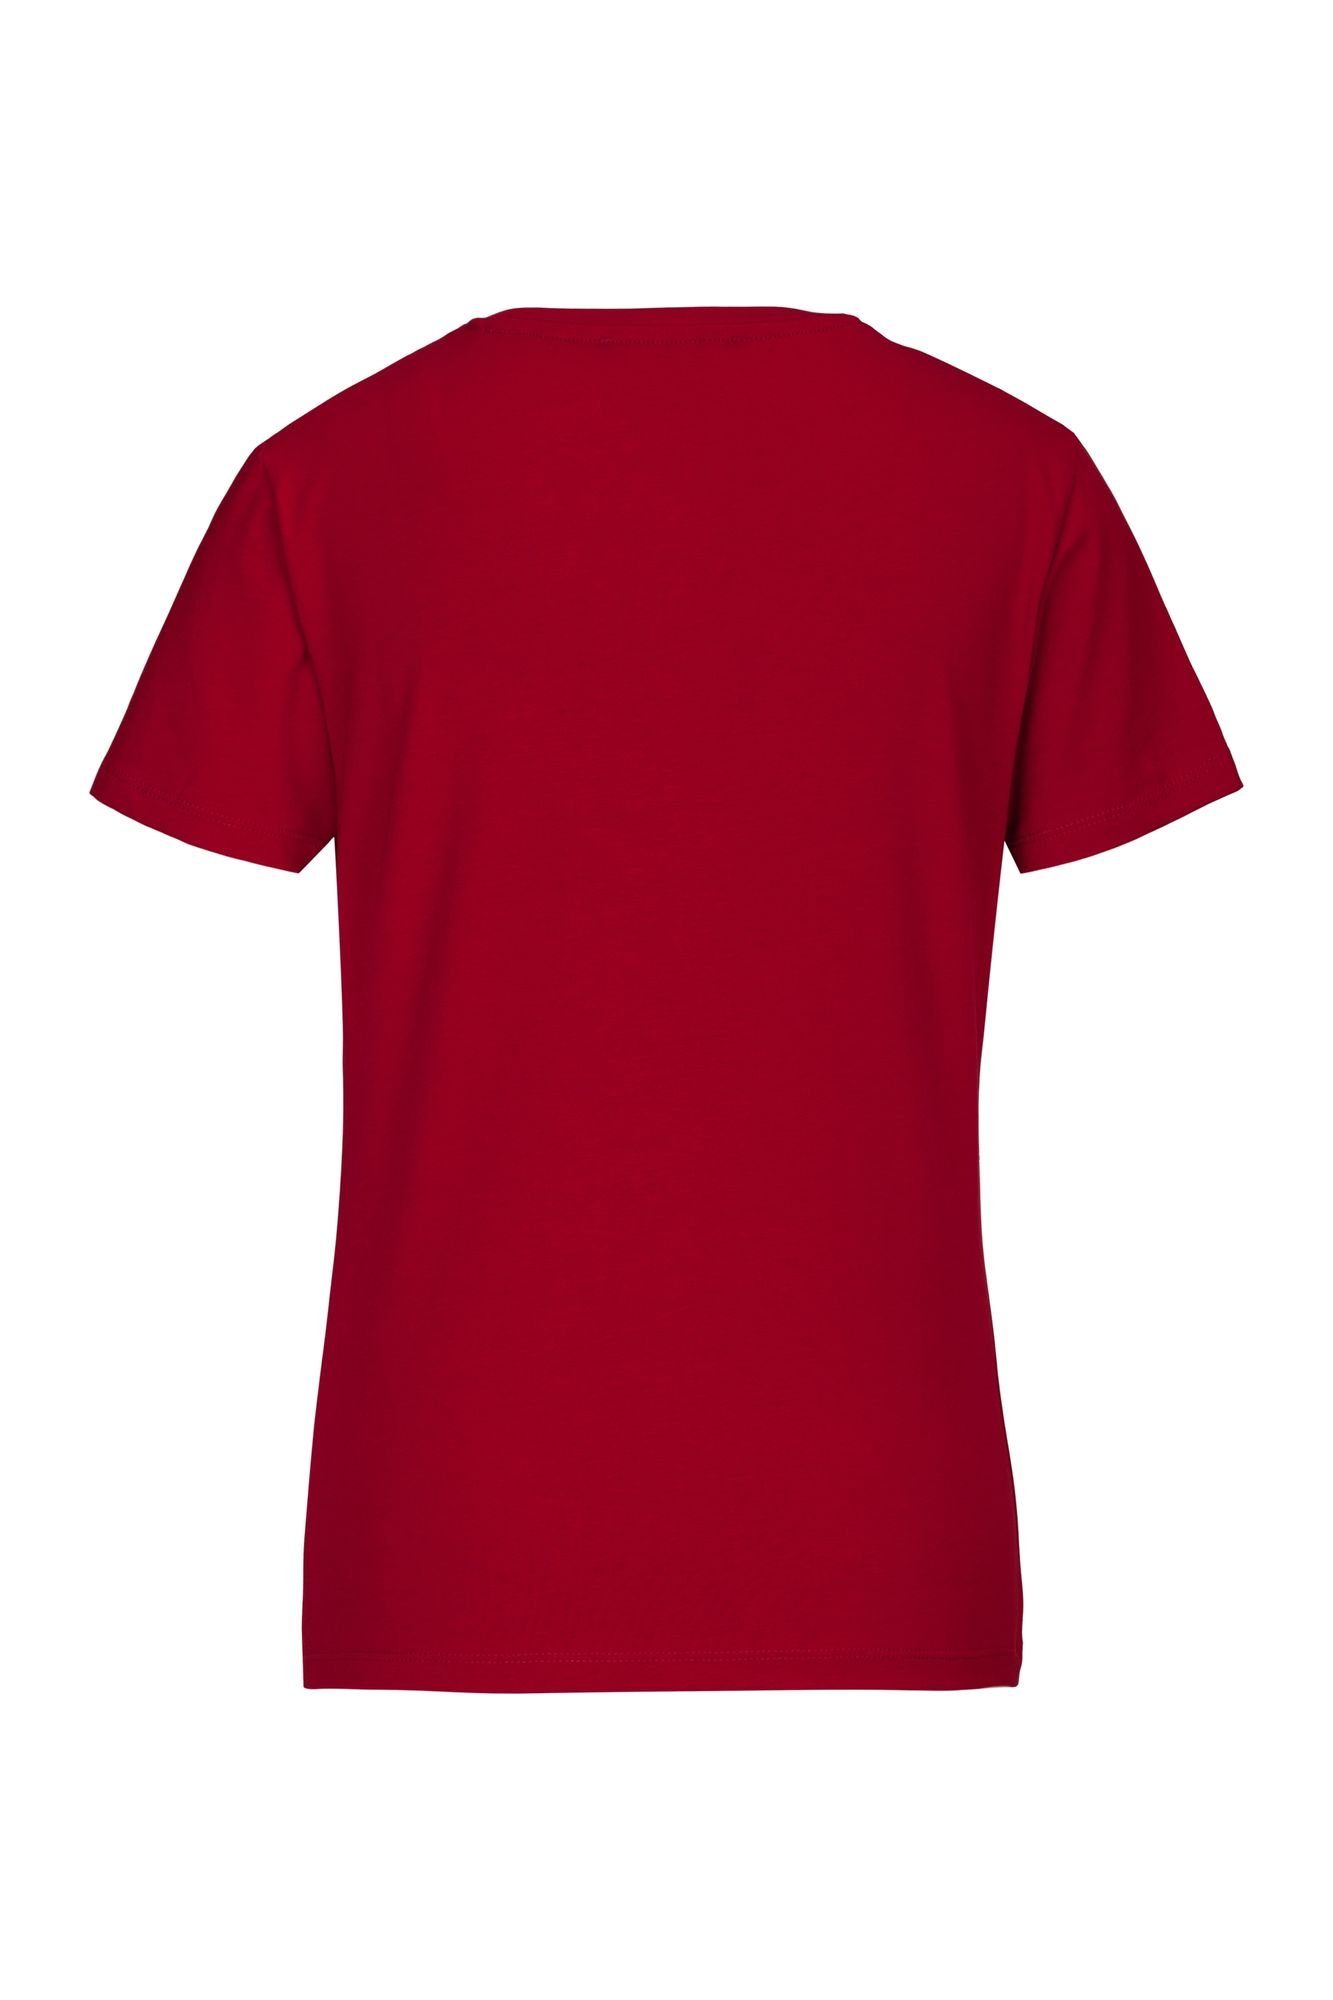 19V69 Italia - Ella Sportivo by Versace RED Versace T-Shirt SRL by